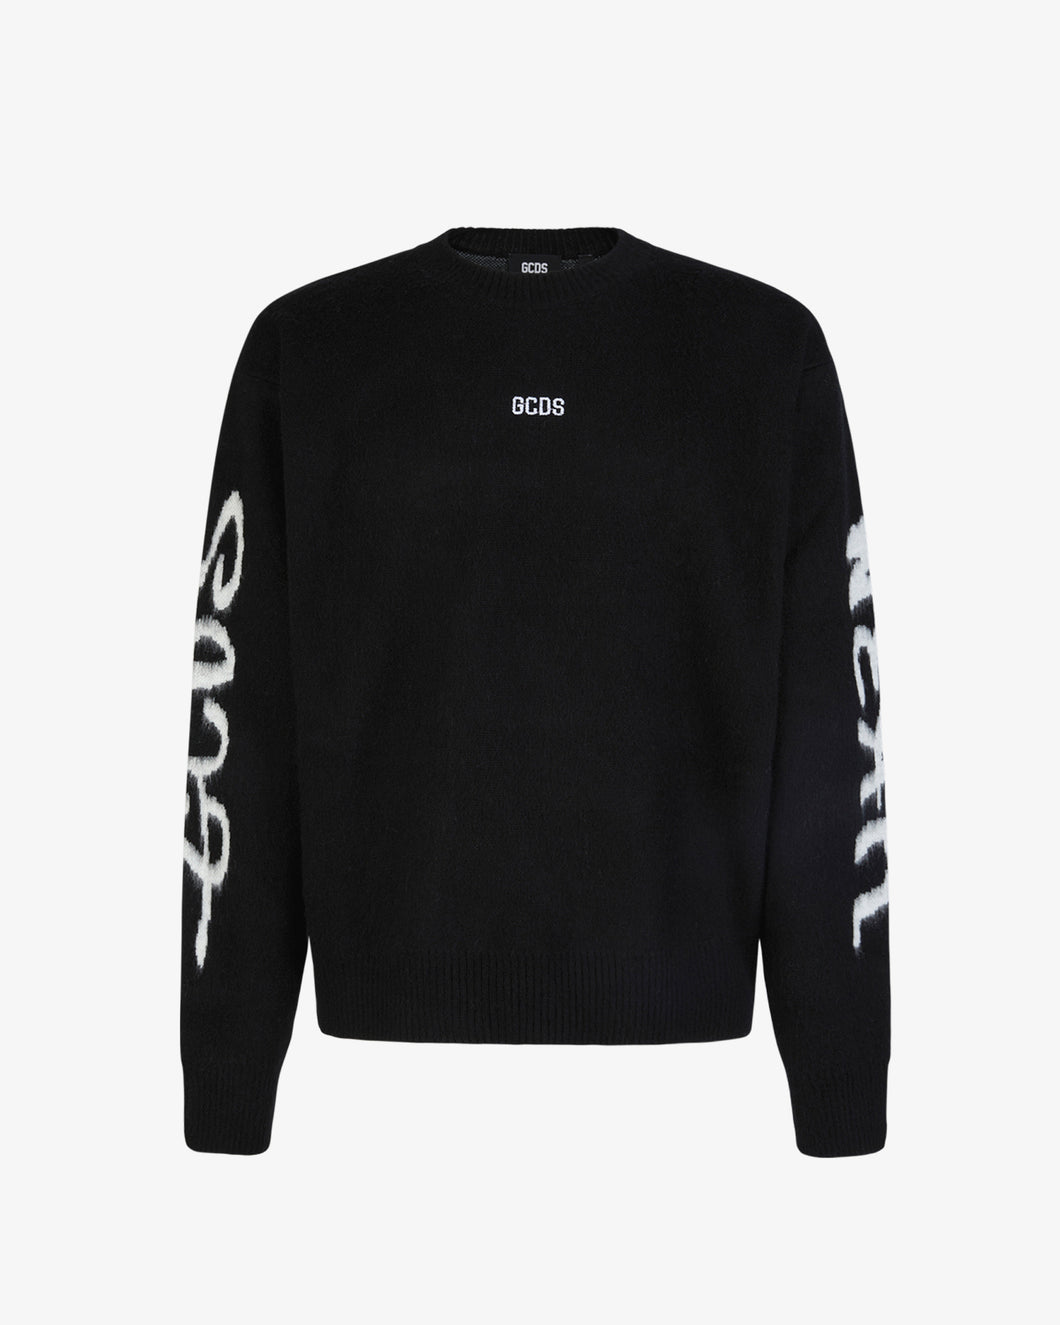 Gcds Graffiti Brushed Sweater | Men Knitwear Black | GCDS®